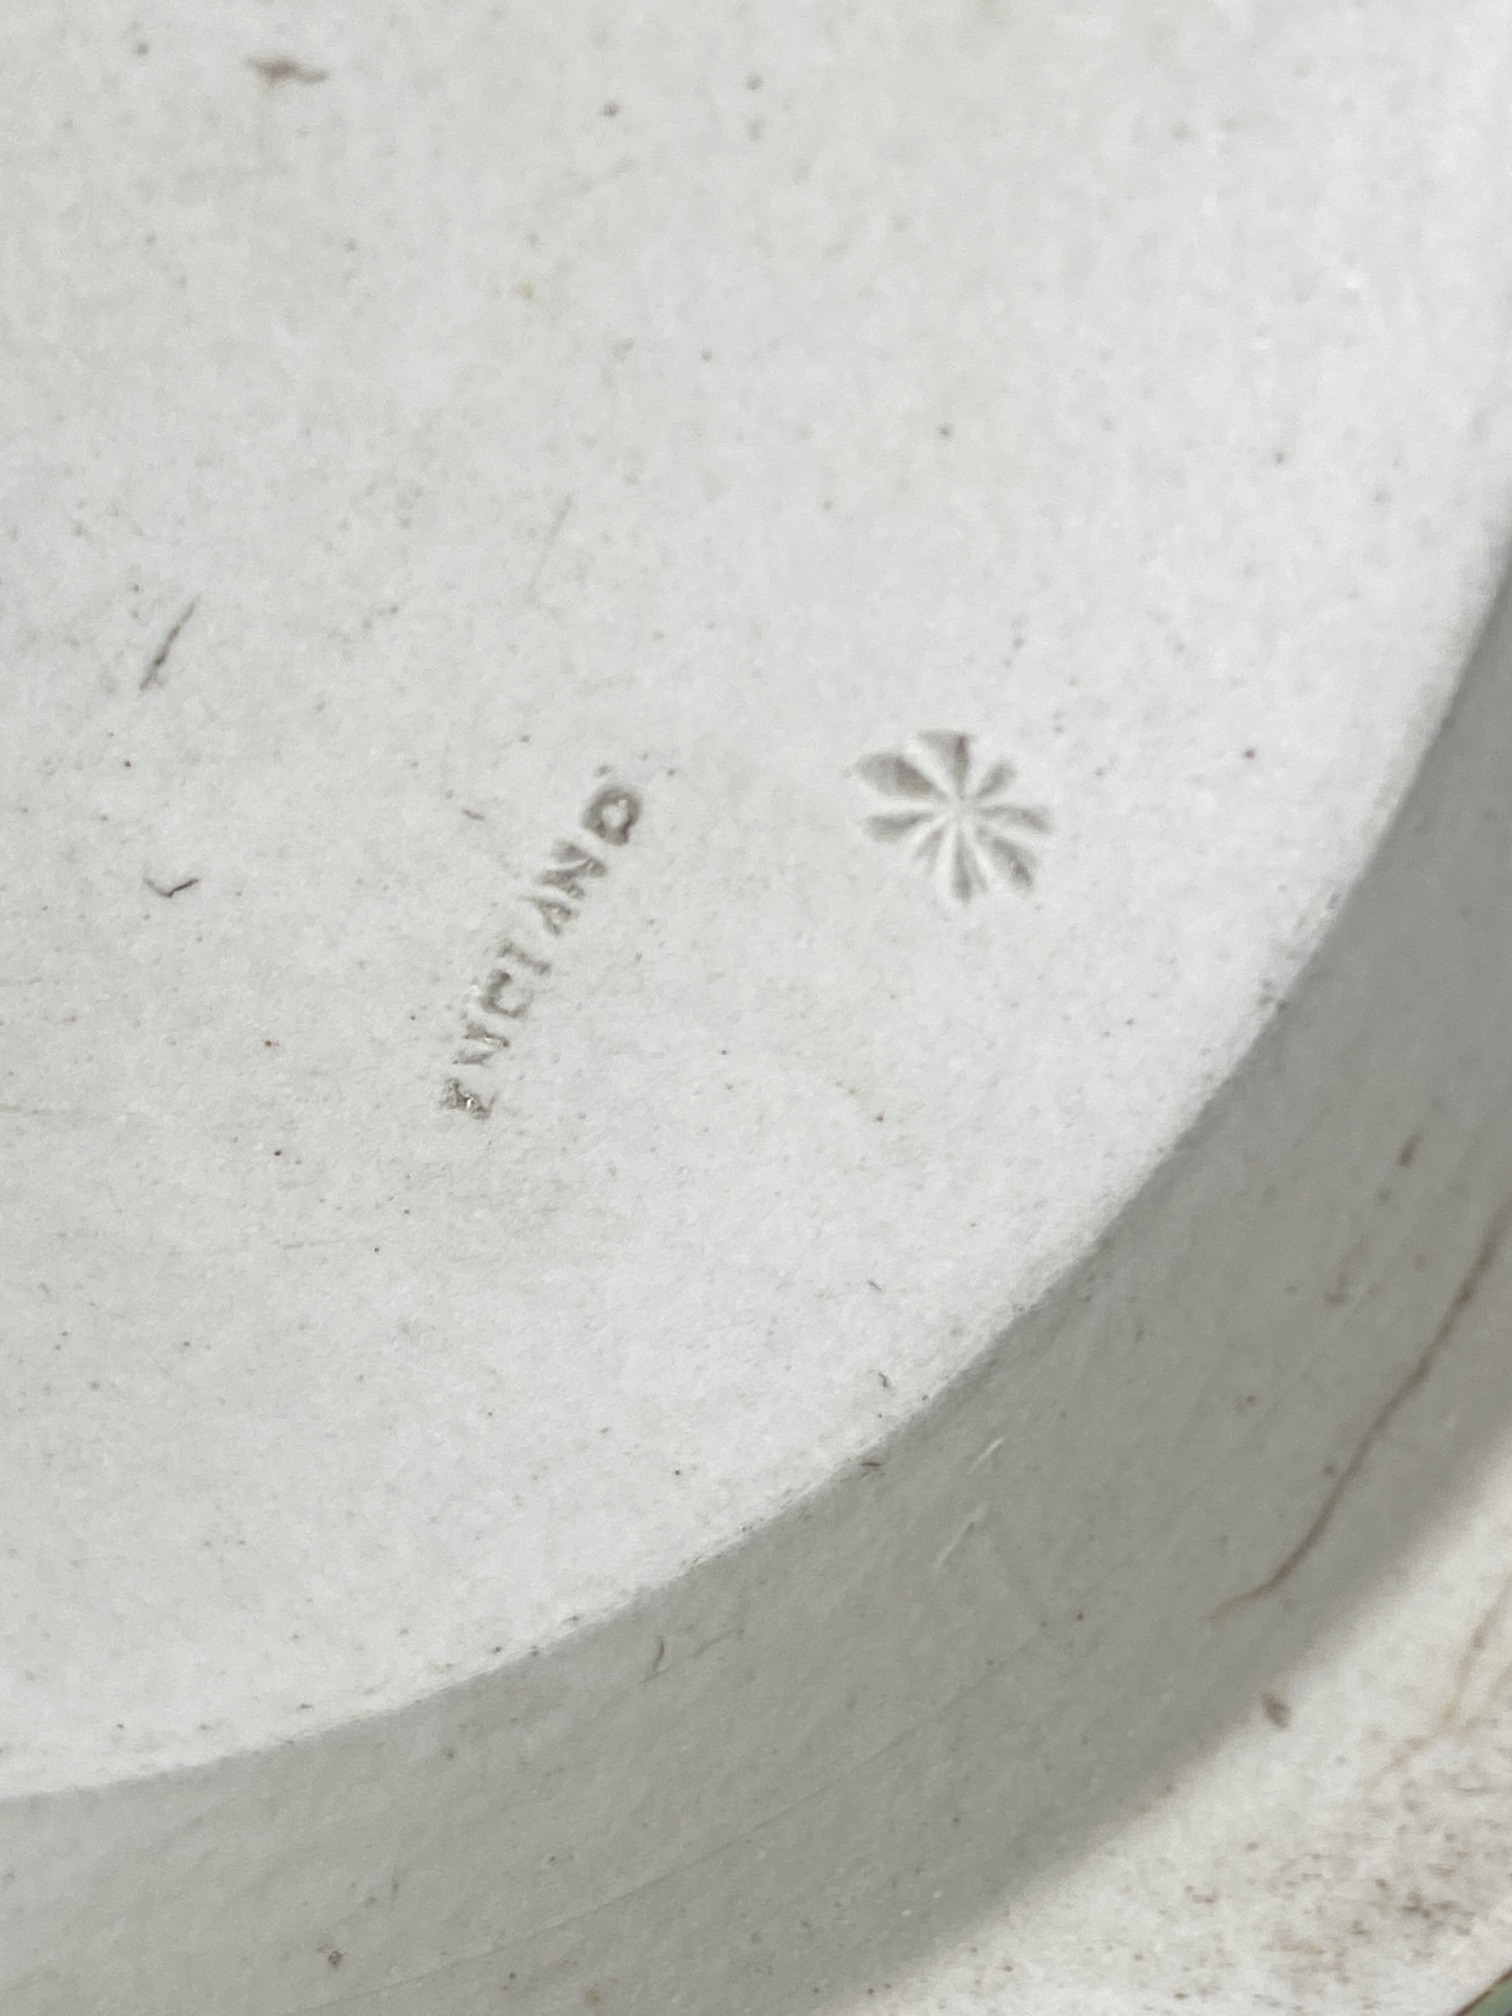 Antiques wedgwood jasperware marks on A Primer